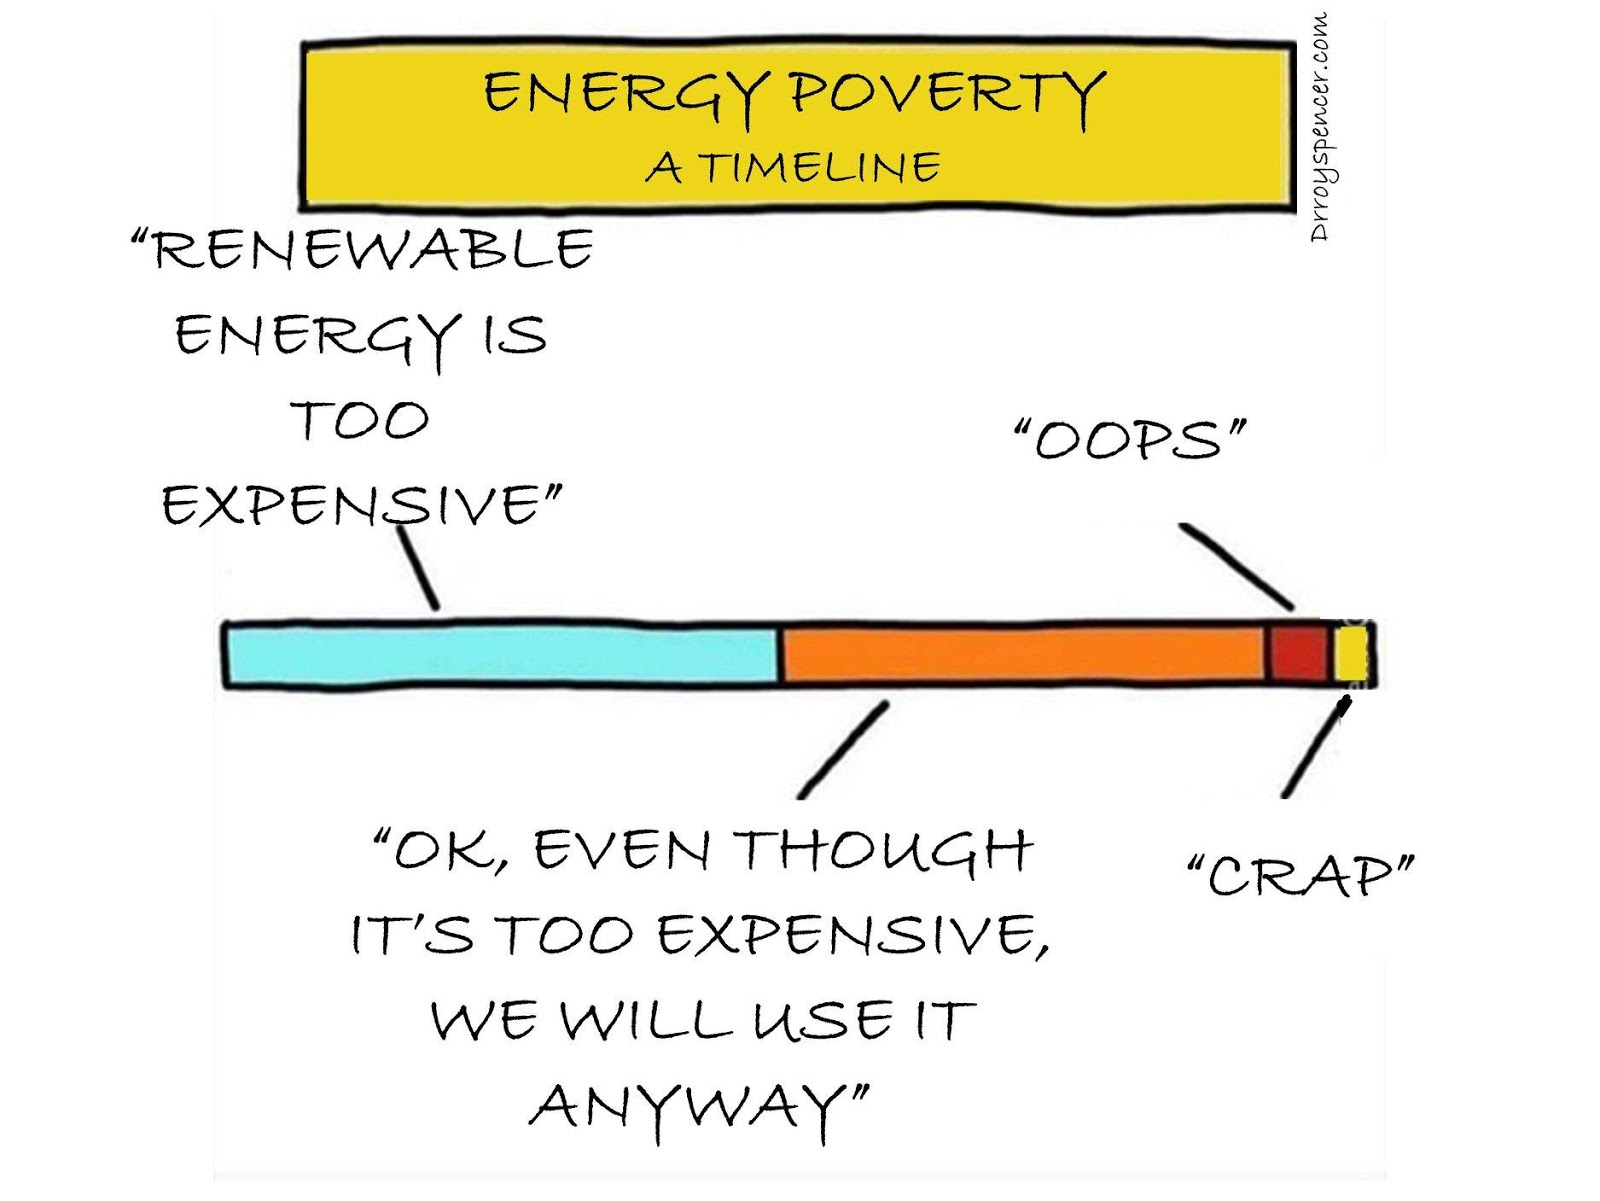 Energy poverty timeline meme